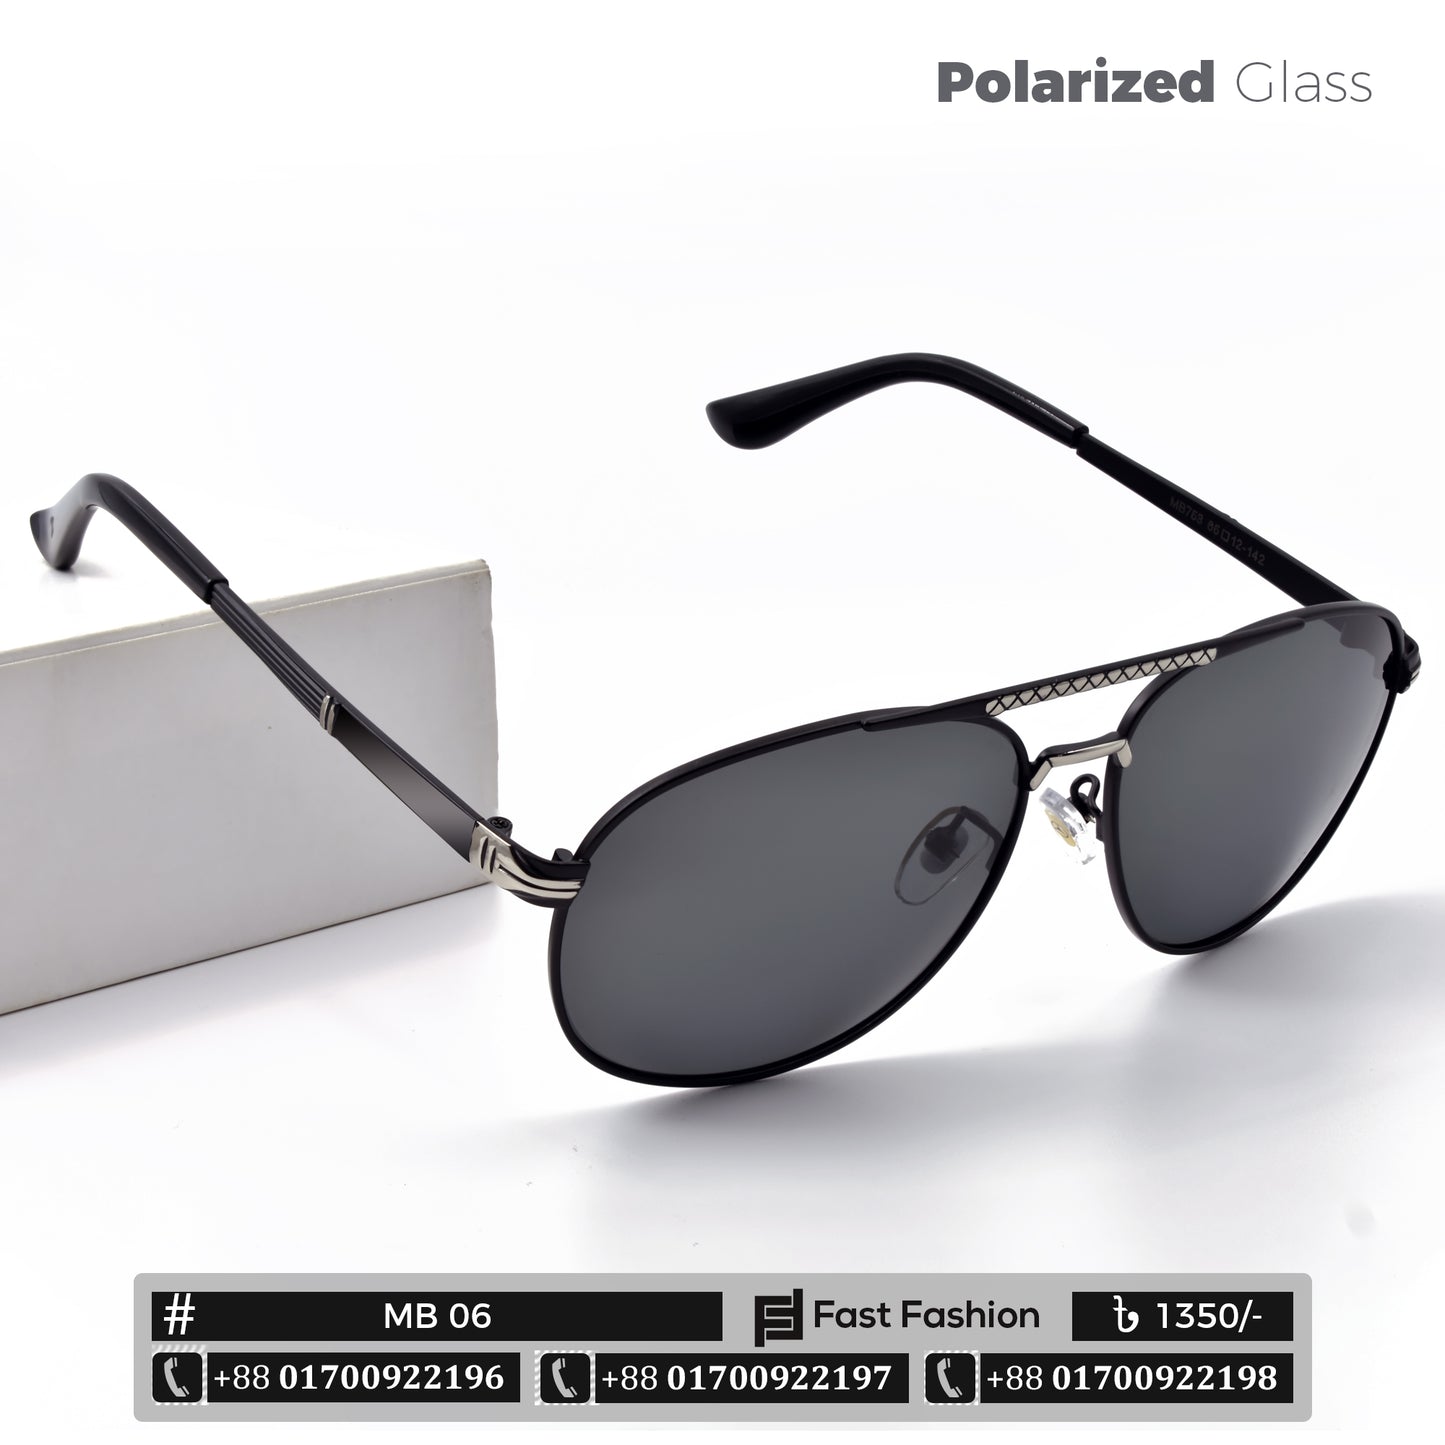 New Stylish Trendy Pilot Shape Business Class Polarized Sunglass | MB 06